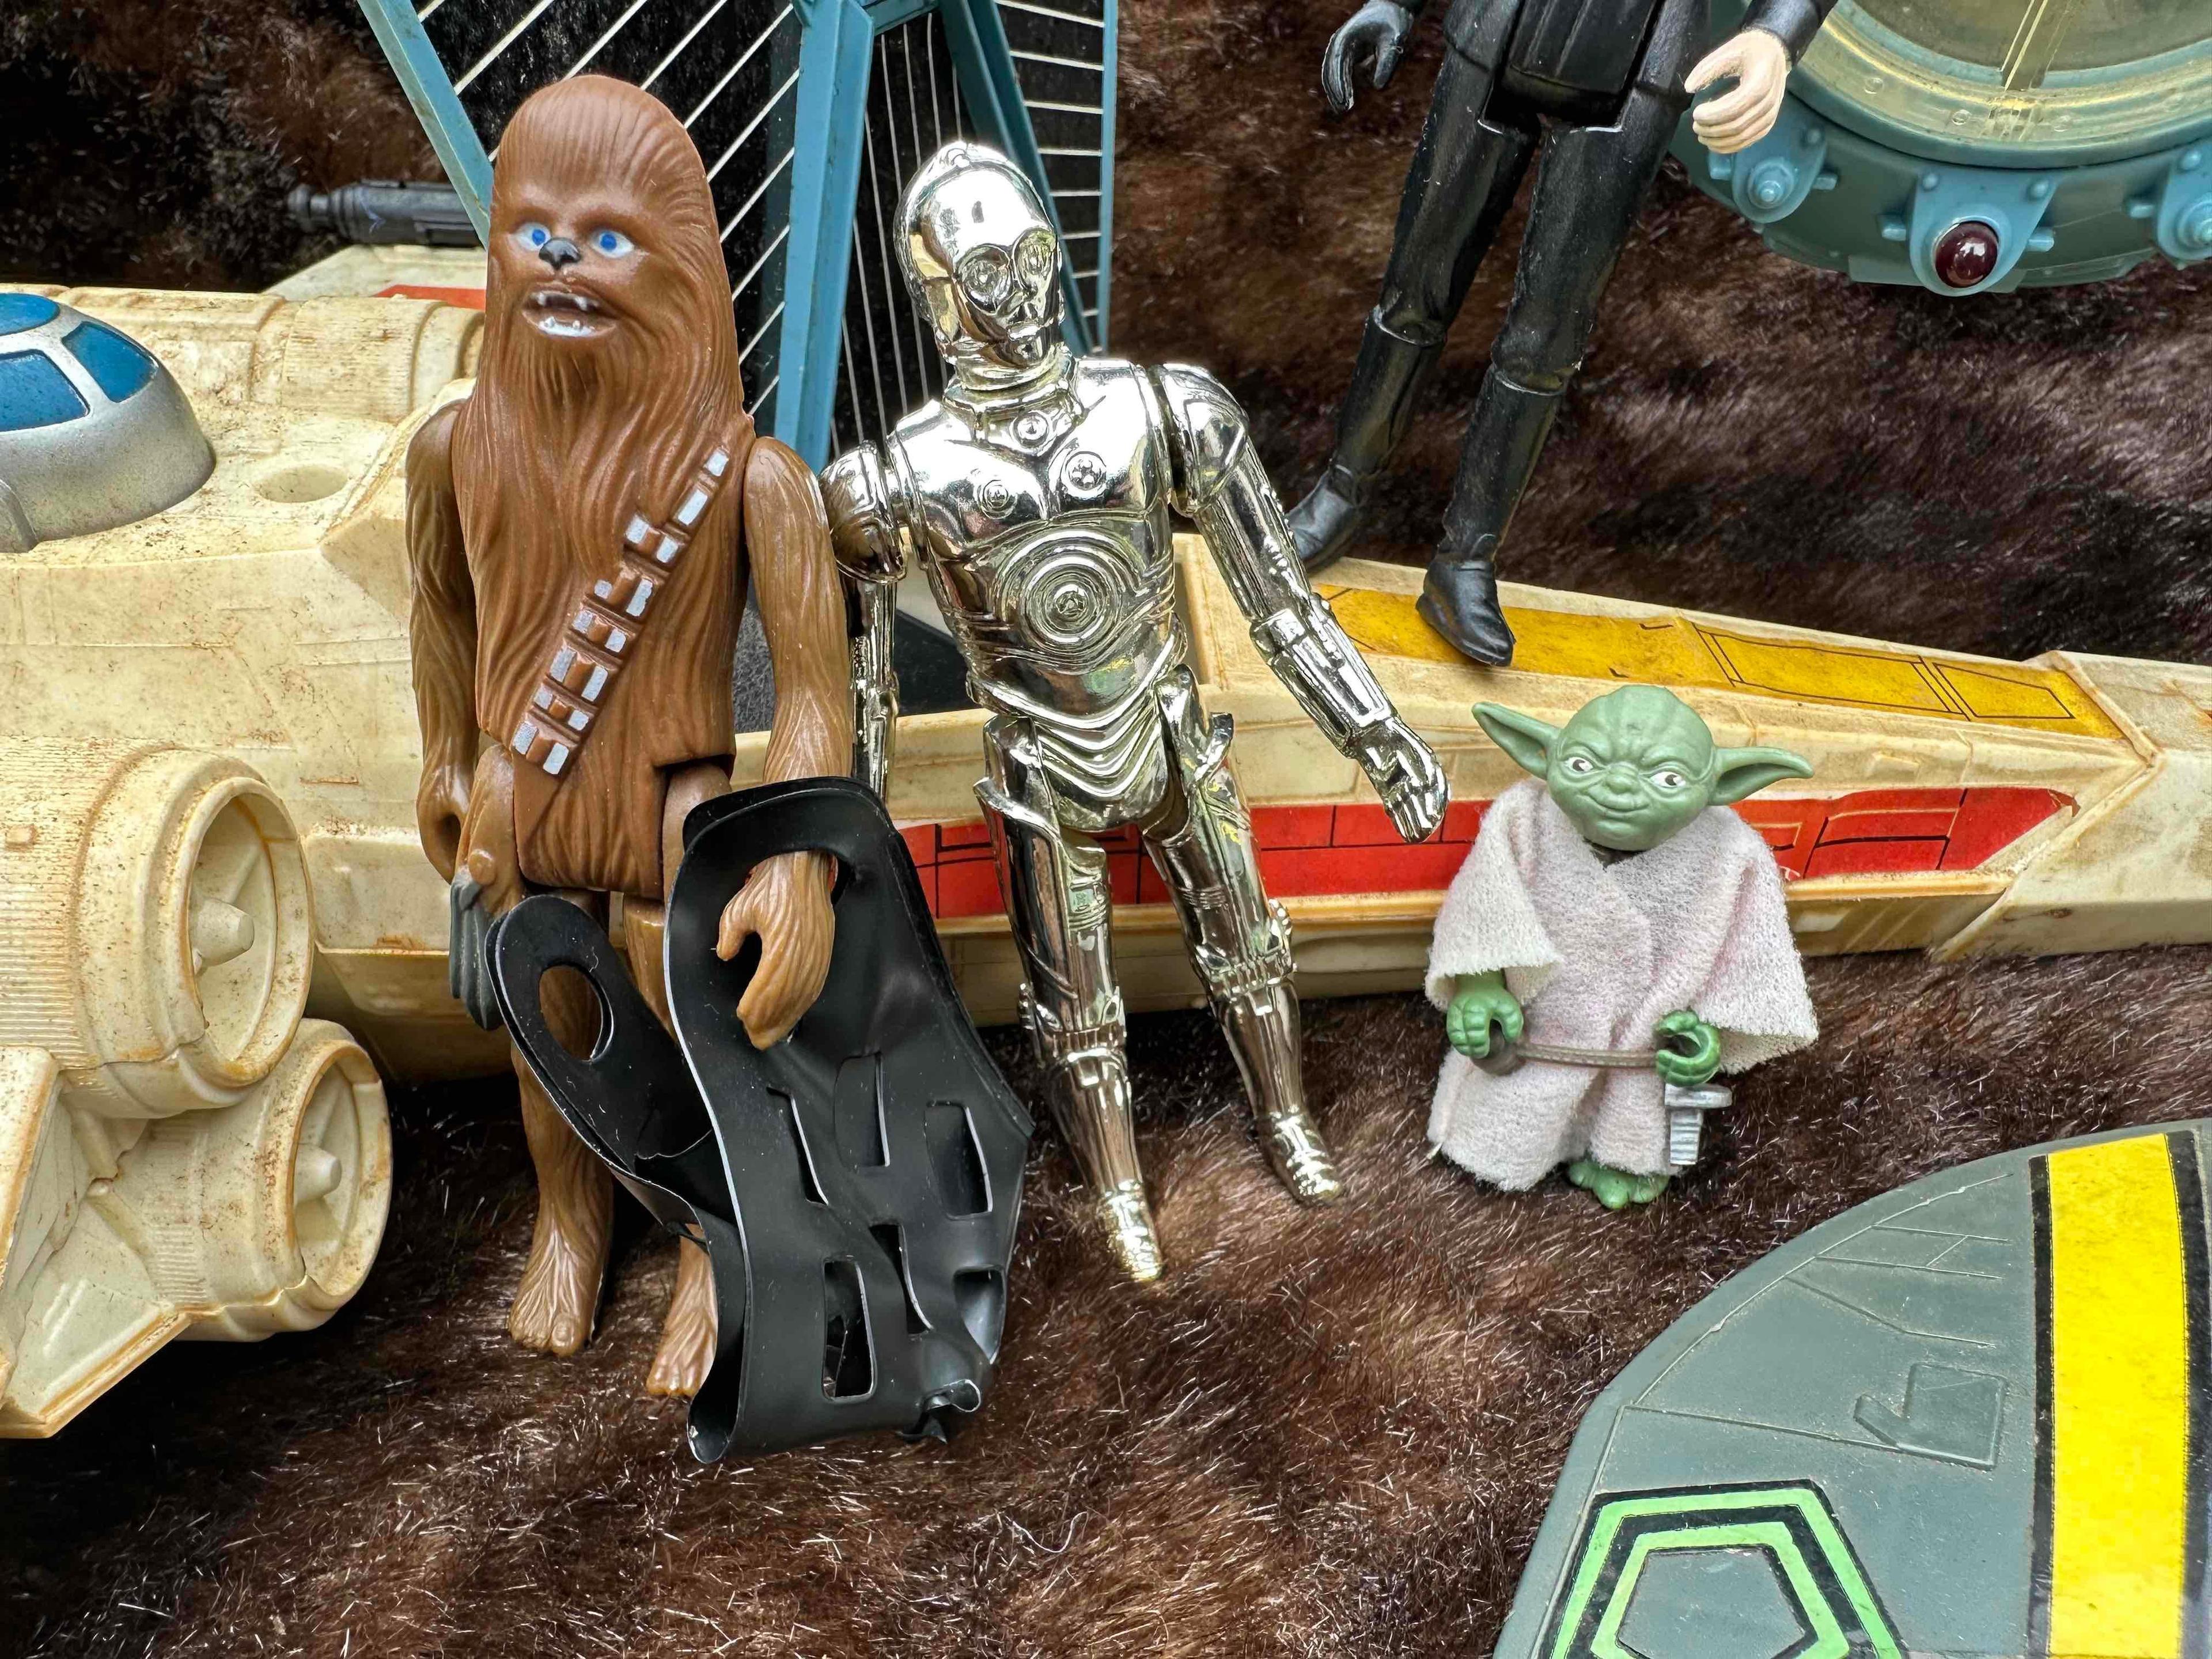 Large Lot of Vintage Star Wars. Ships, Action Figures, Card Backs, Ewoks, Luke, Yoda more